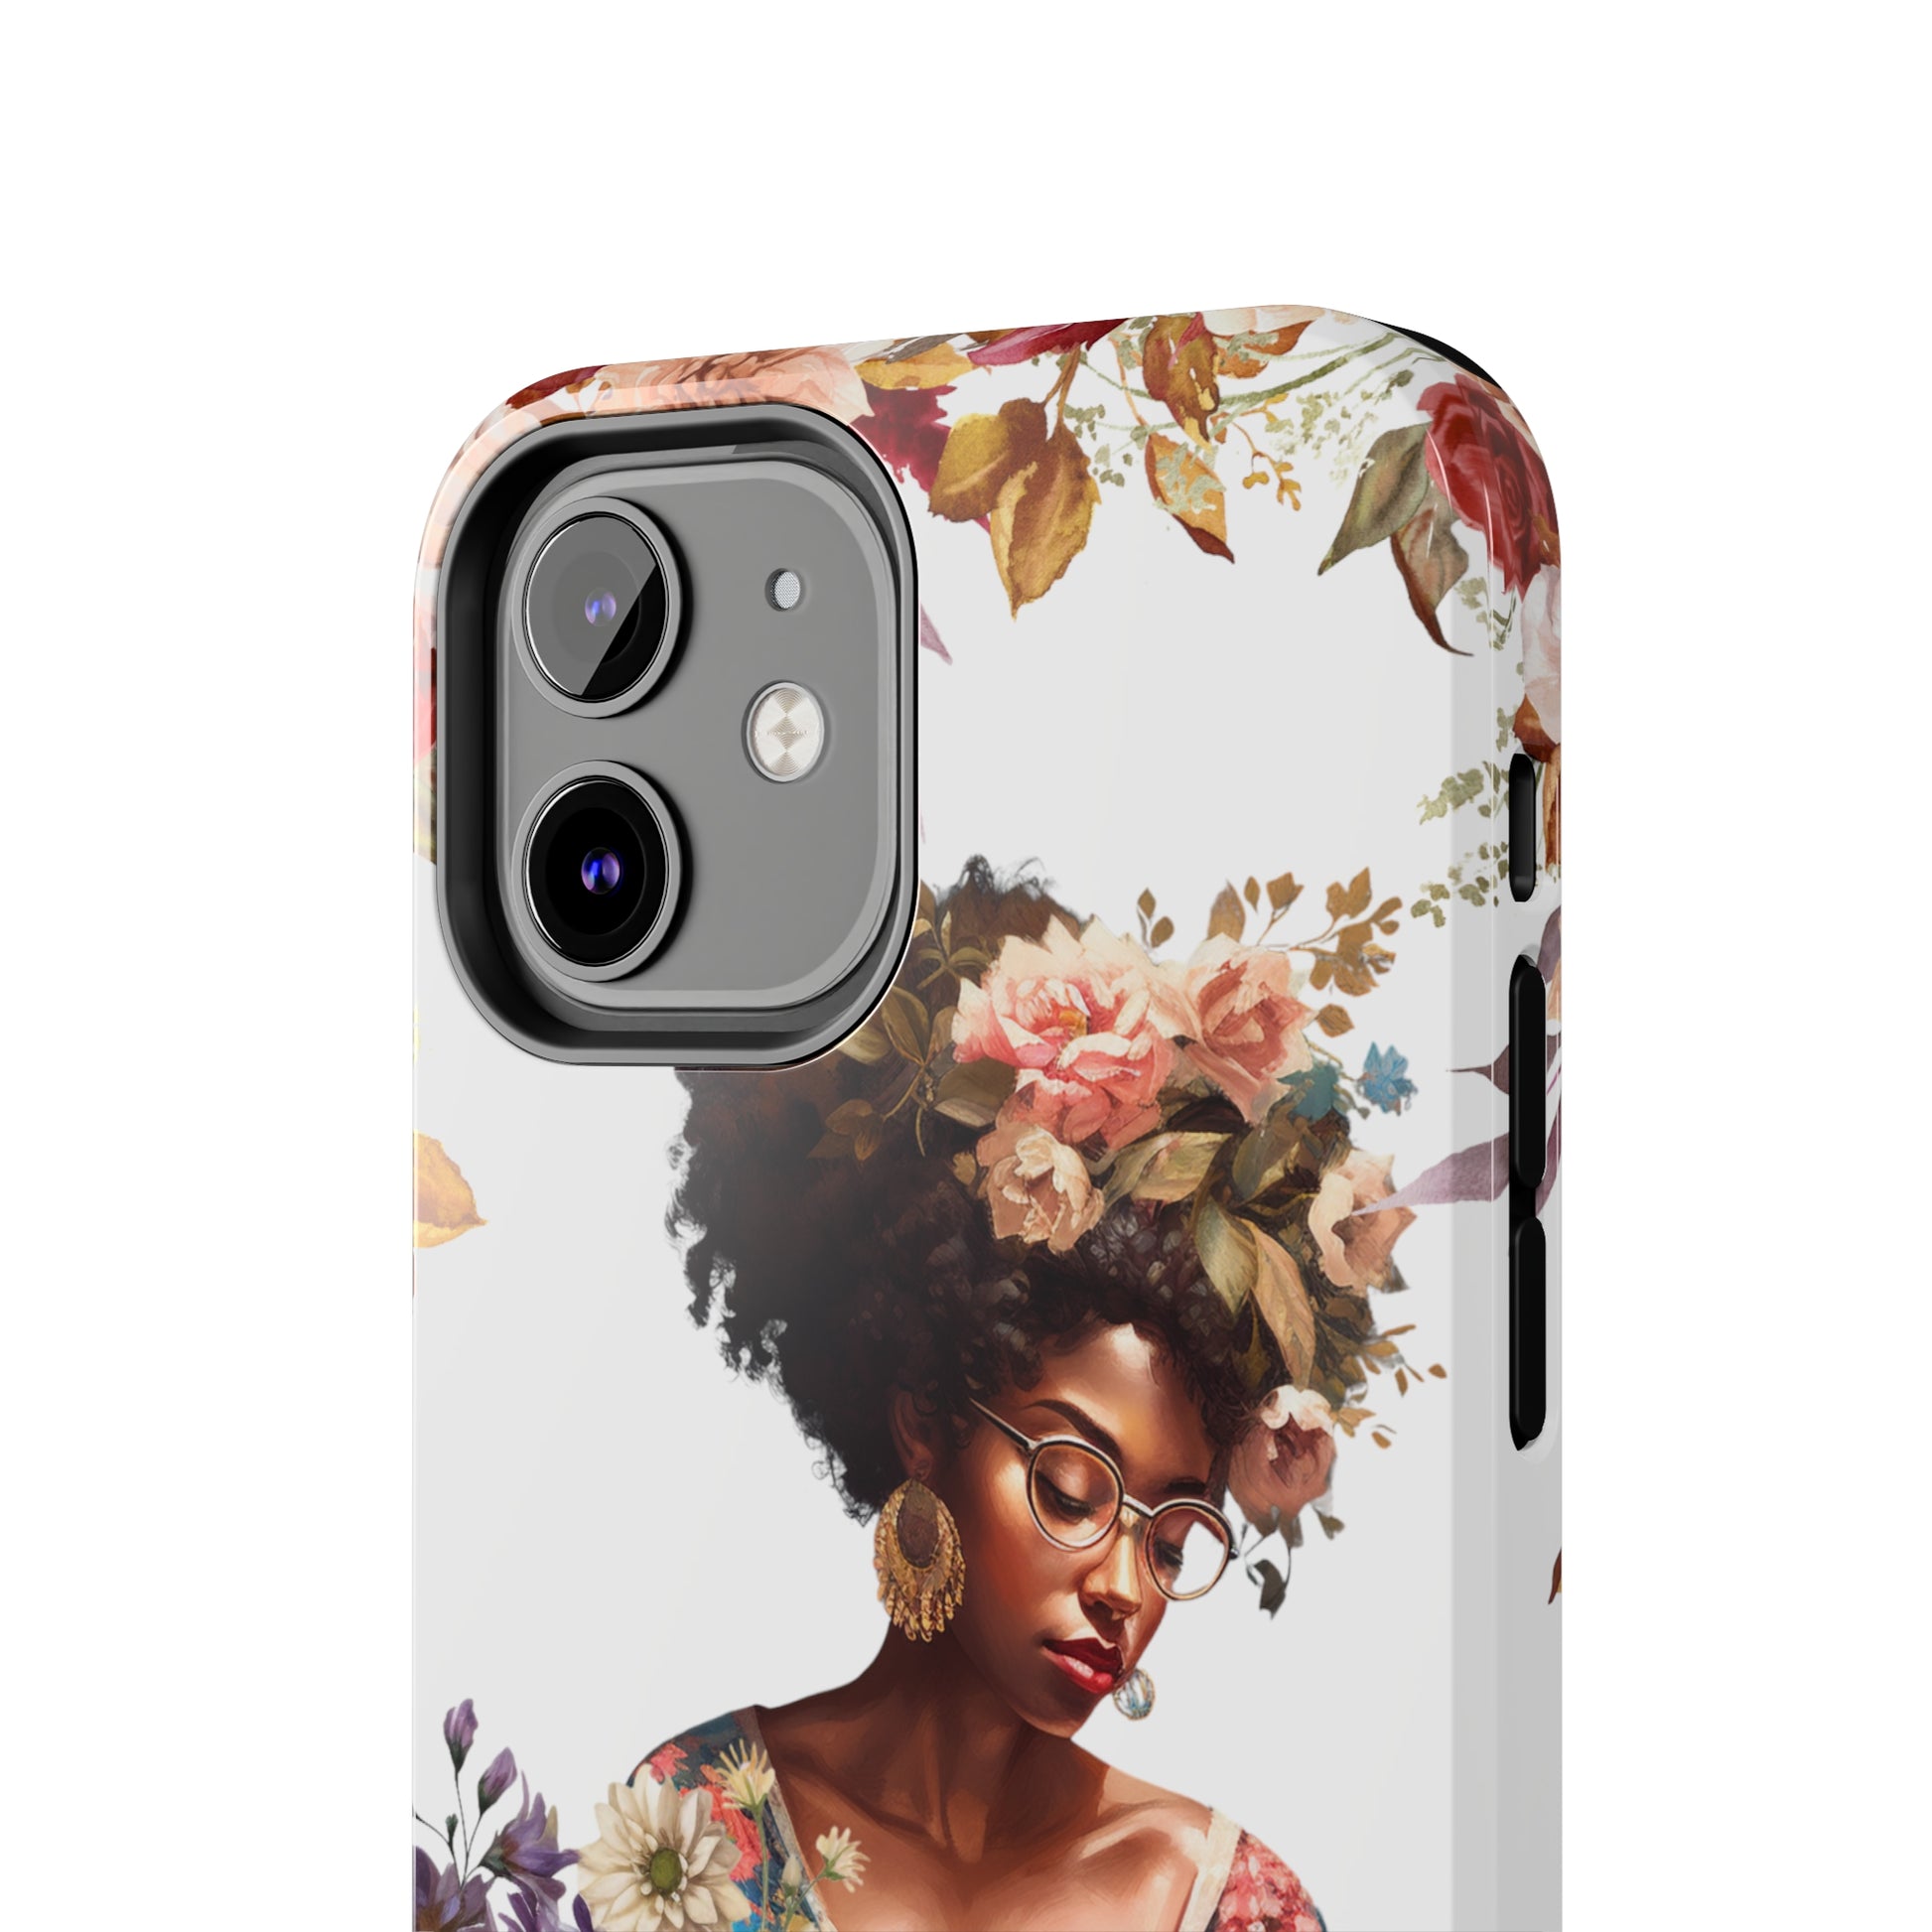 Empowered Women Custom Printed iPhone case by TheGlassyLass.com